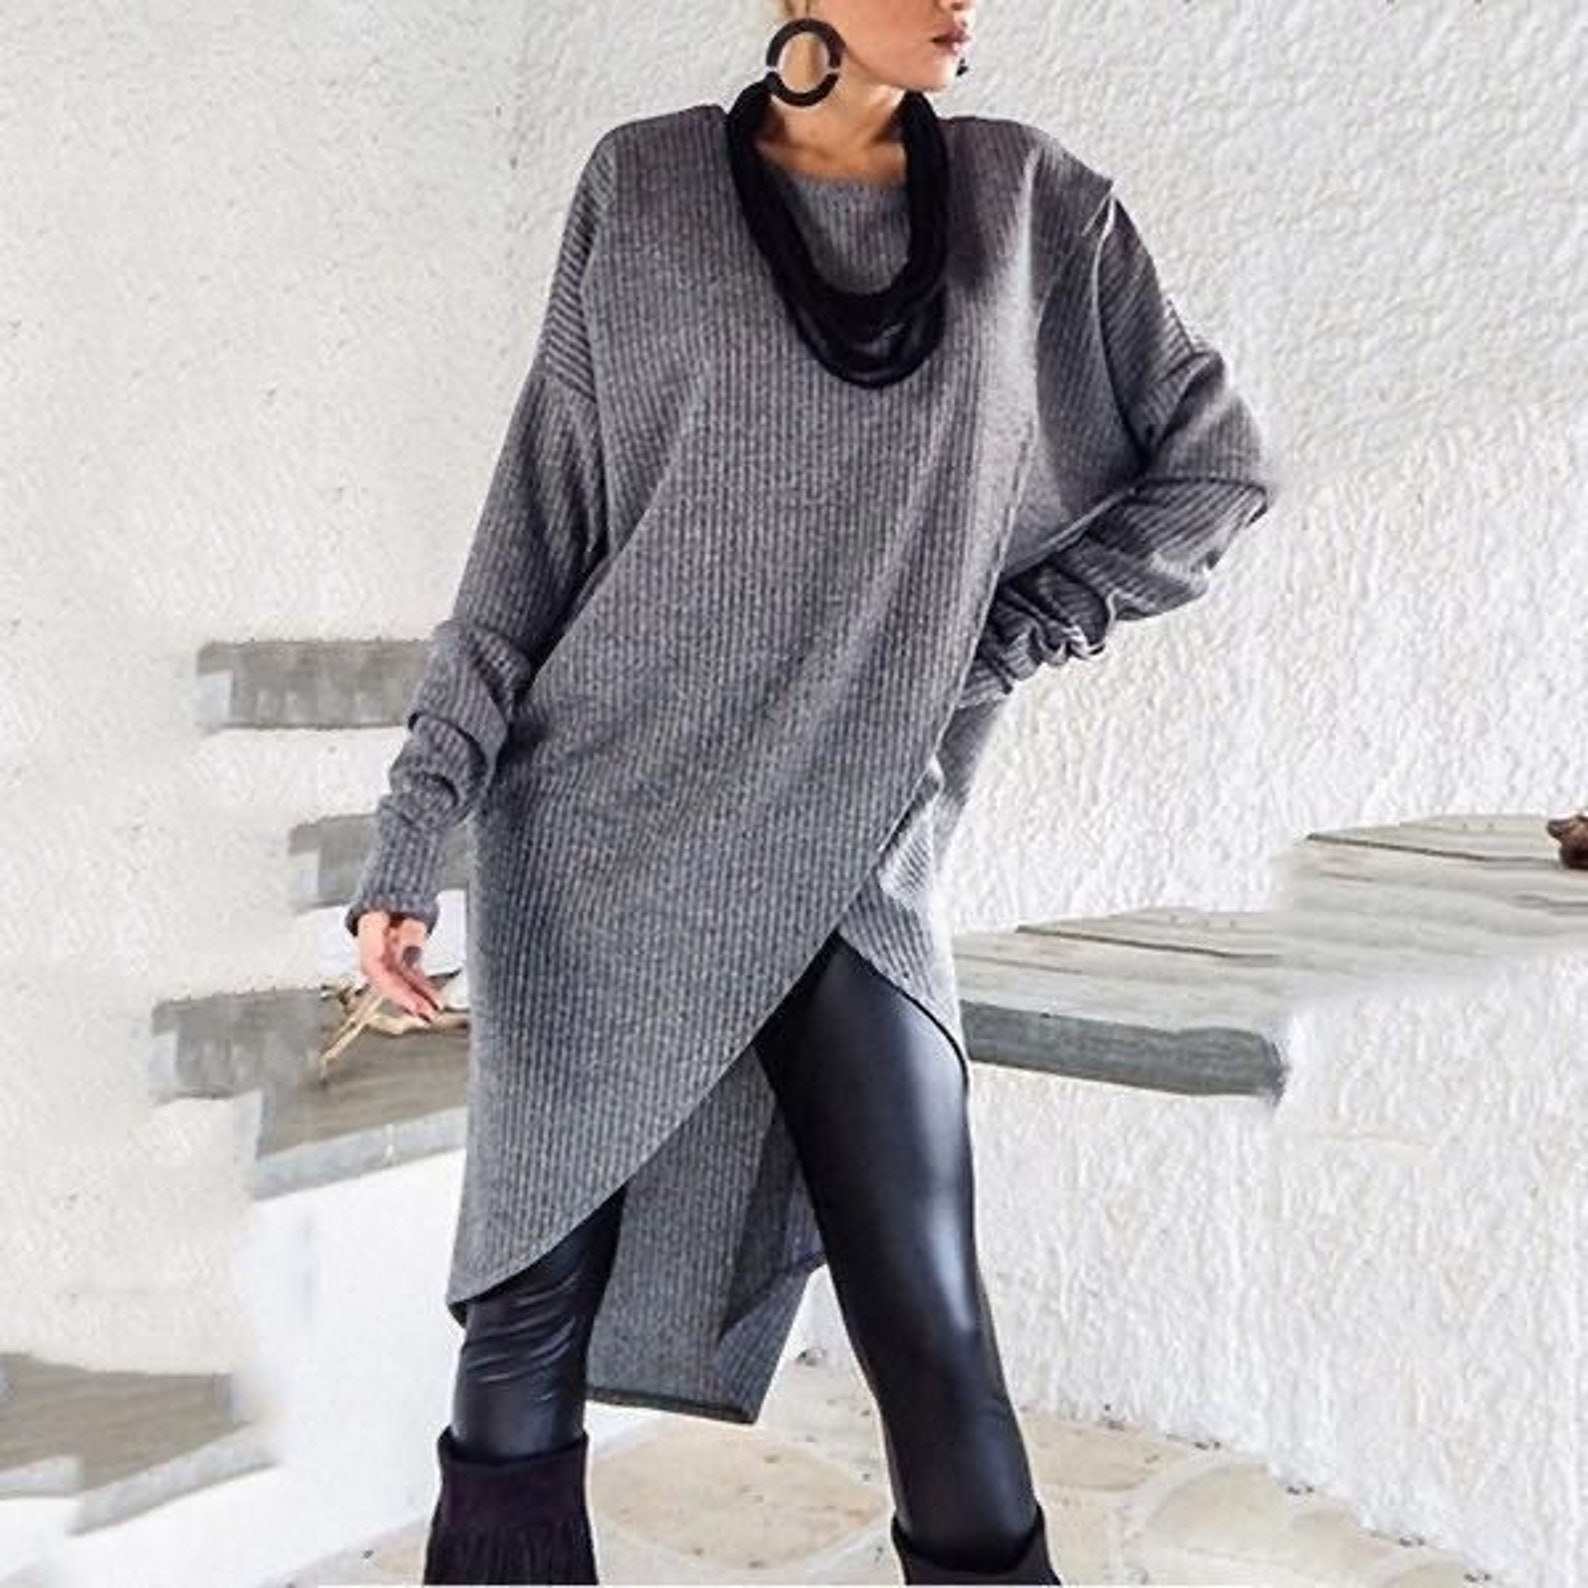 A model wearing the sweater dress in gray